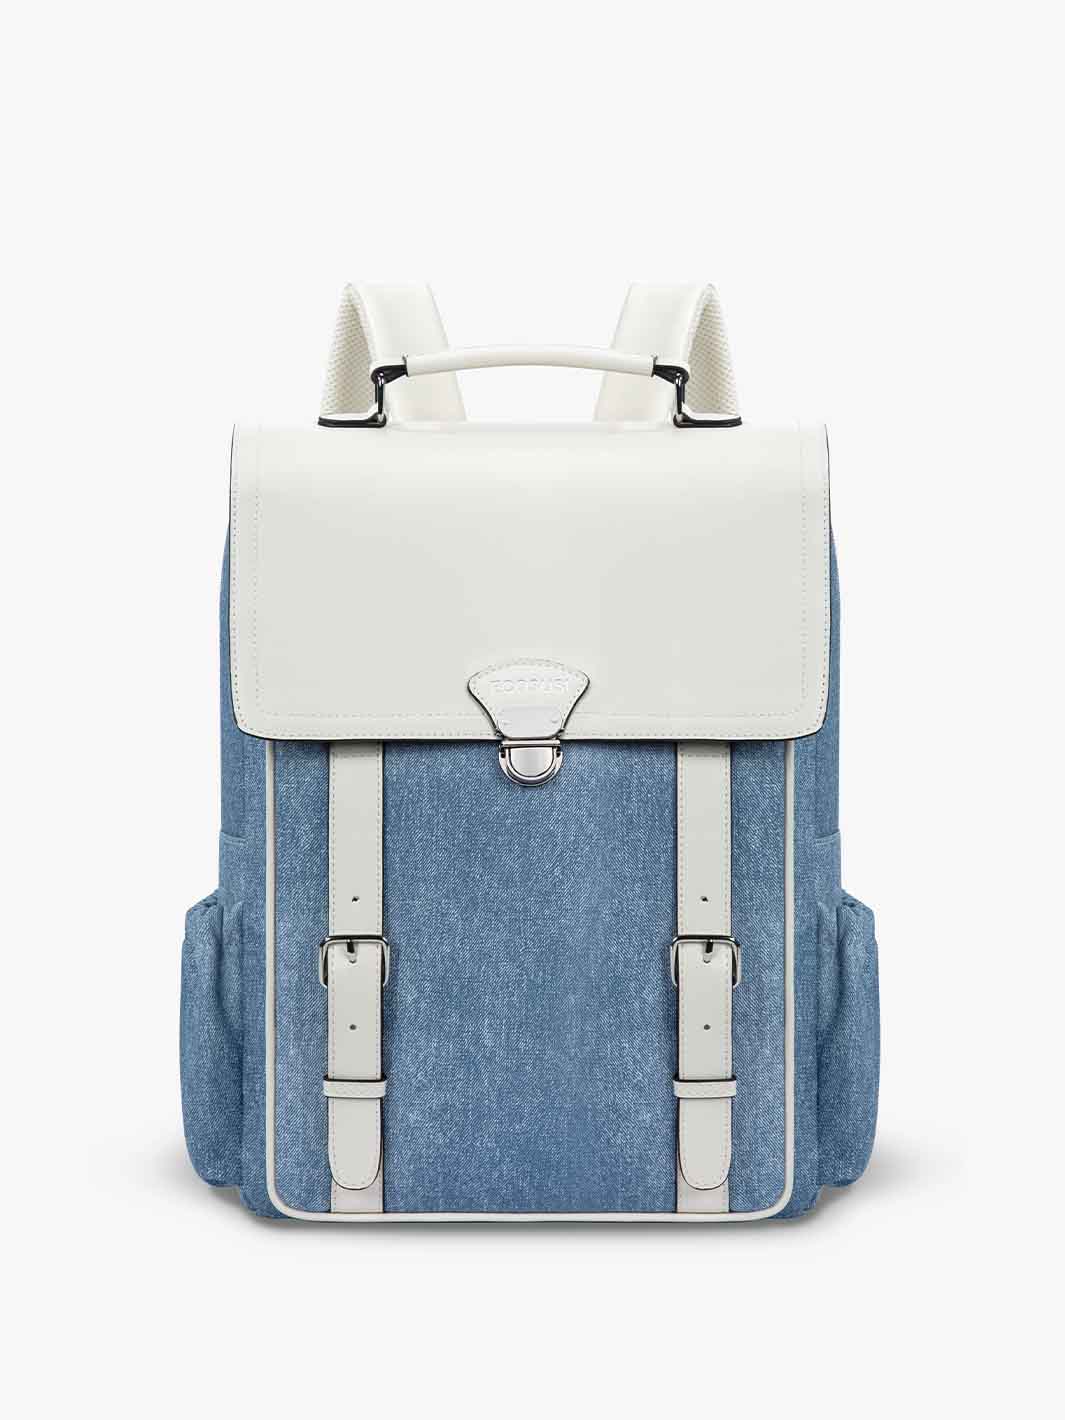 Denim-Inspired PU Fabric 15.6-Inch Backpack